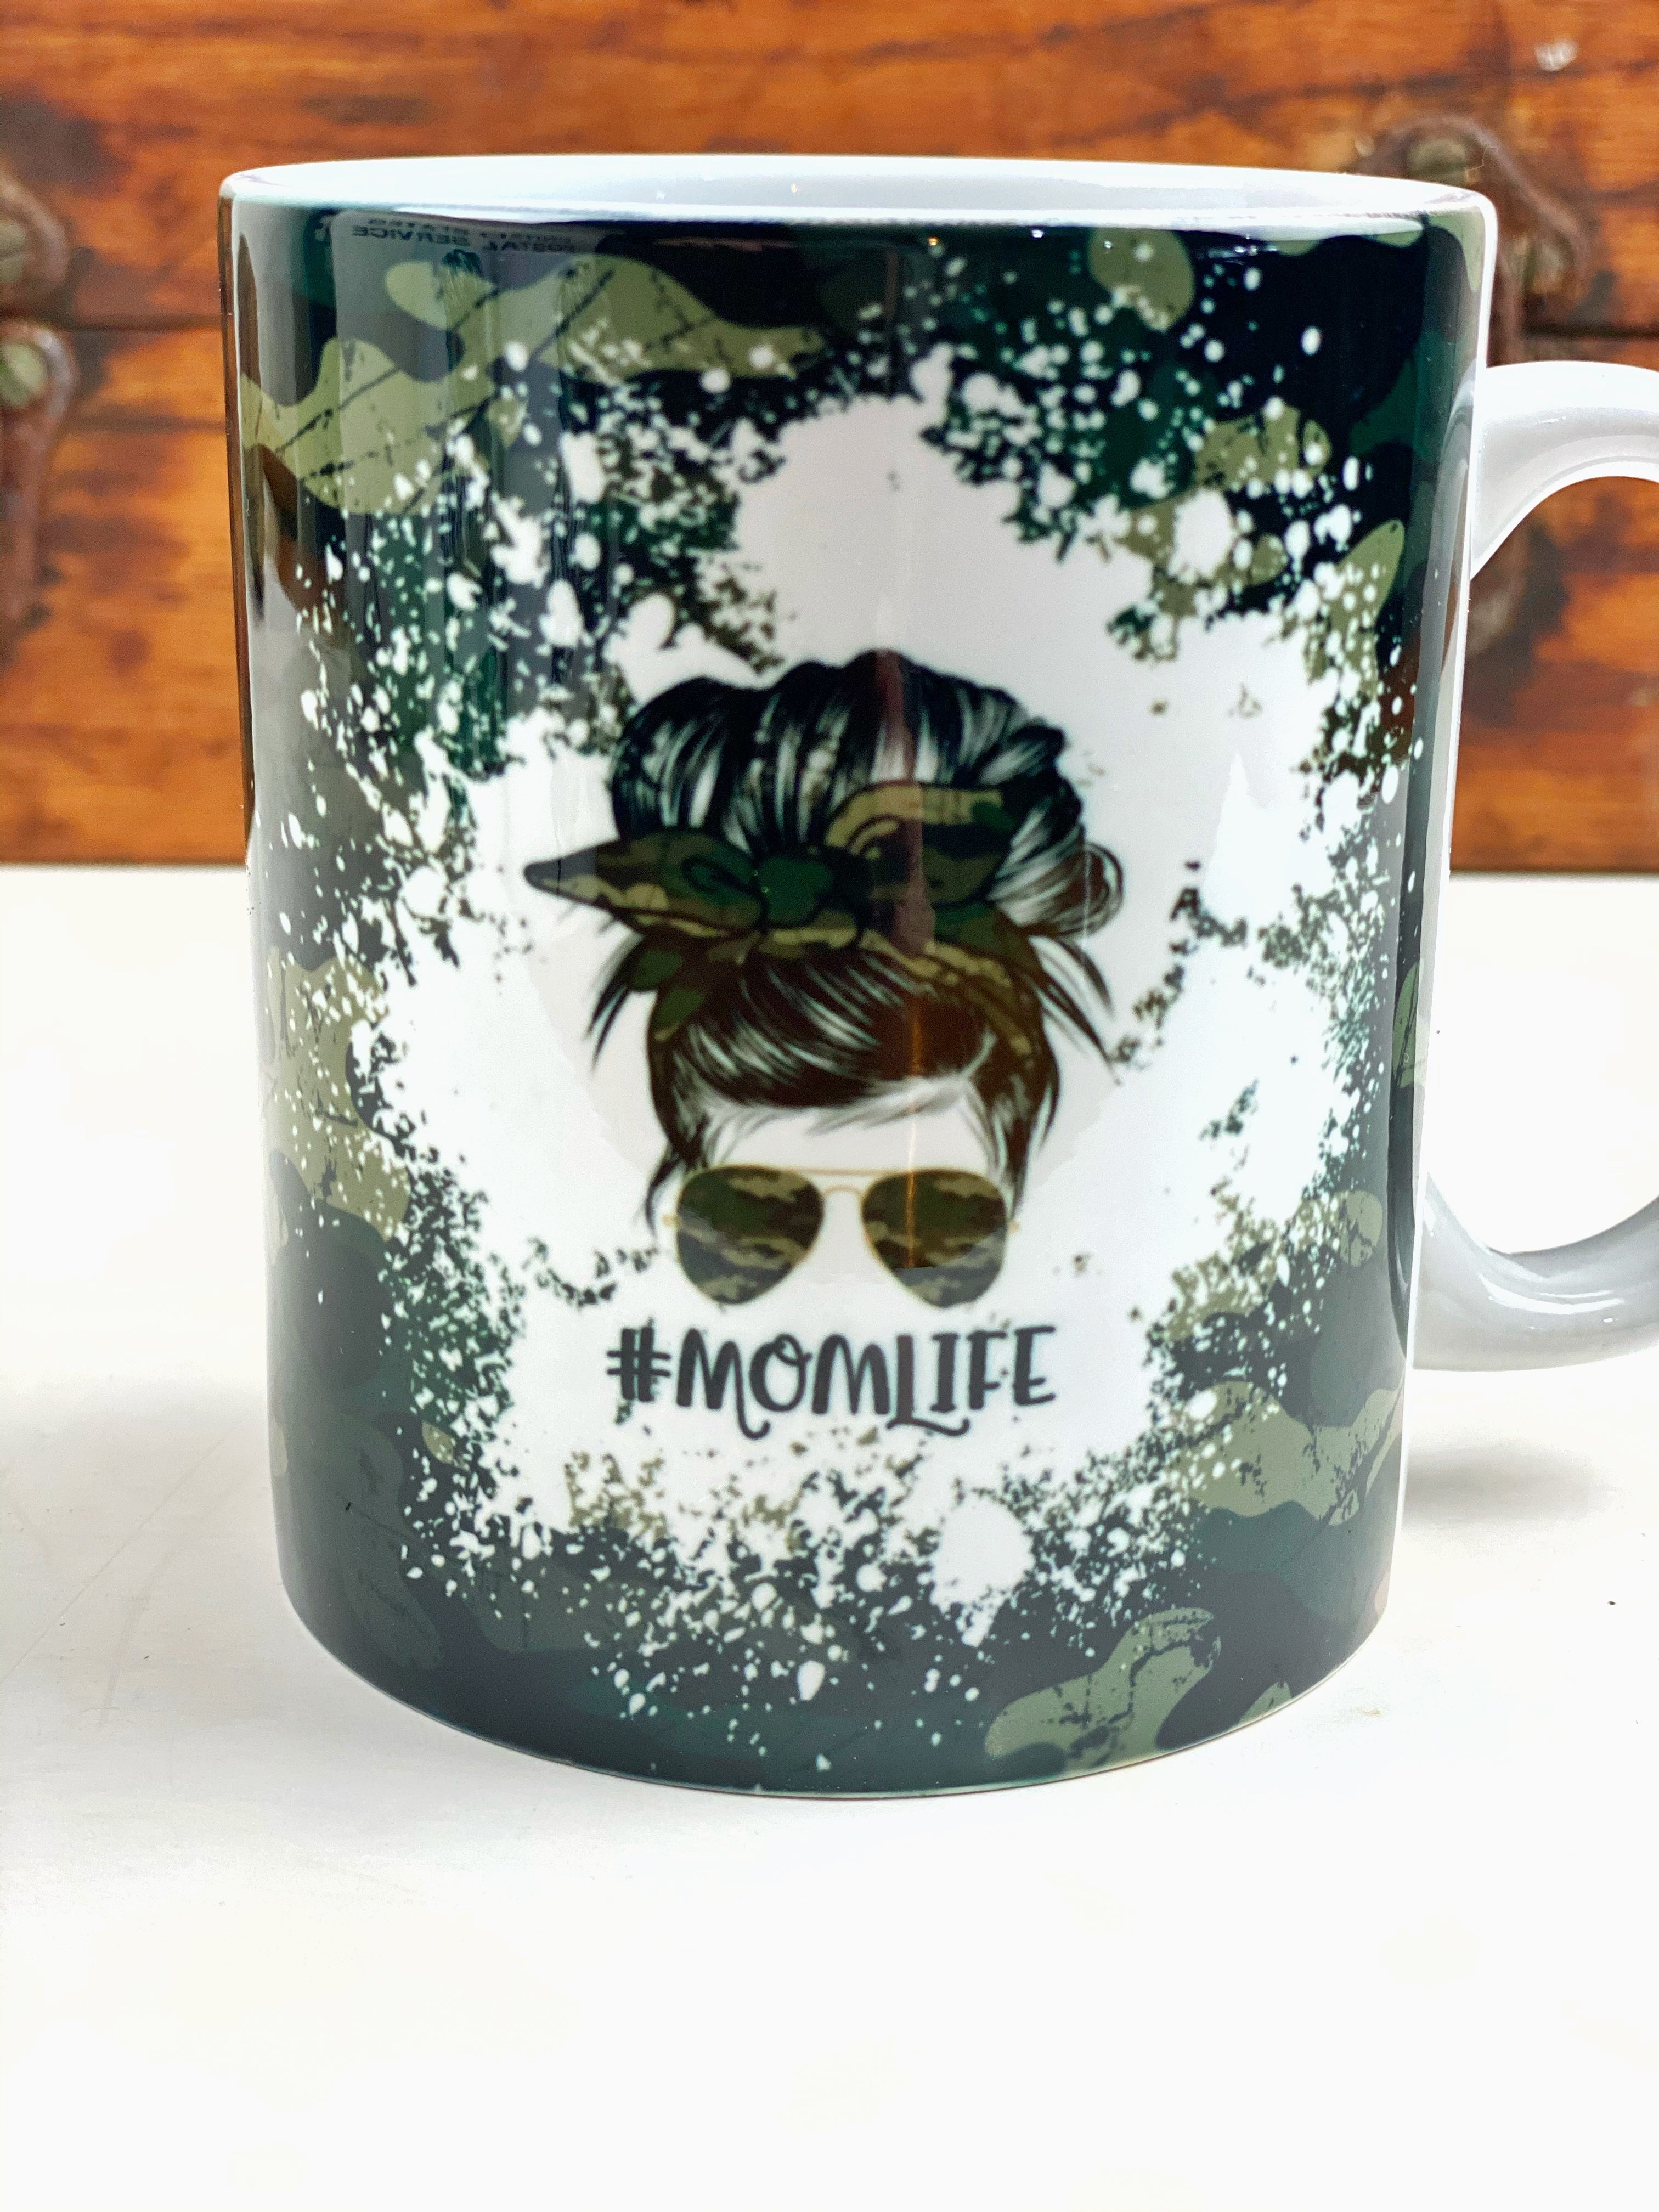 Camo Military Mom Life Ceramic Mug Sublimation Coffee Cup #momlife Army Navy Marine